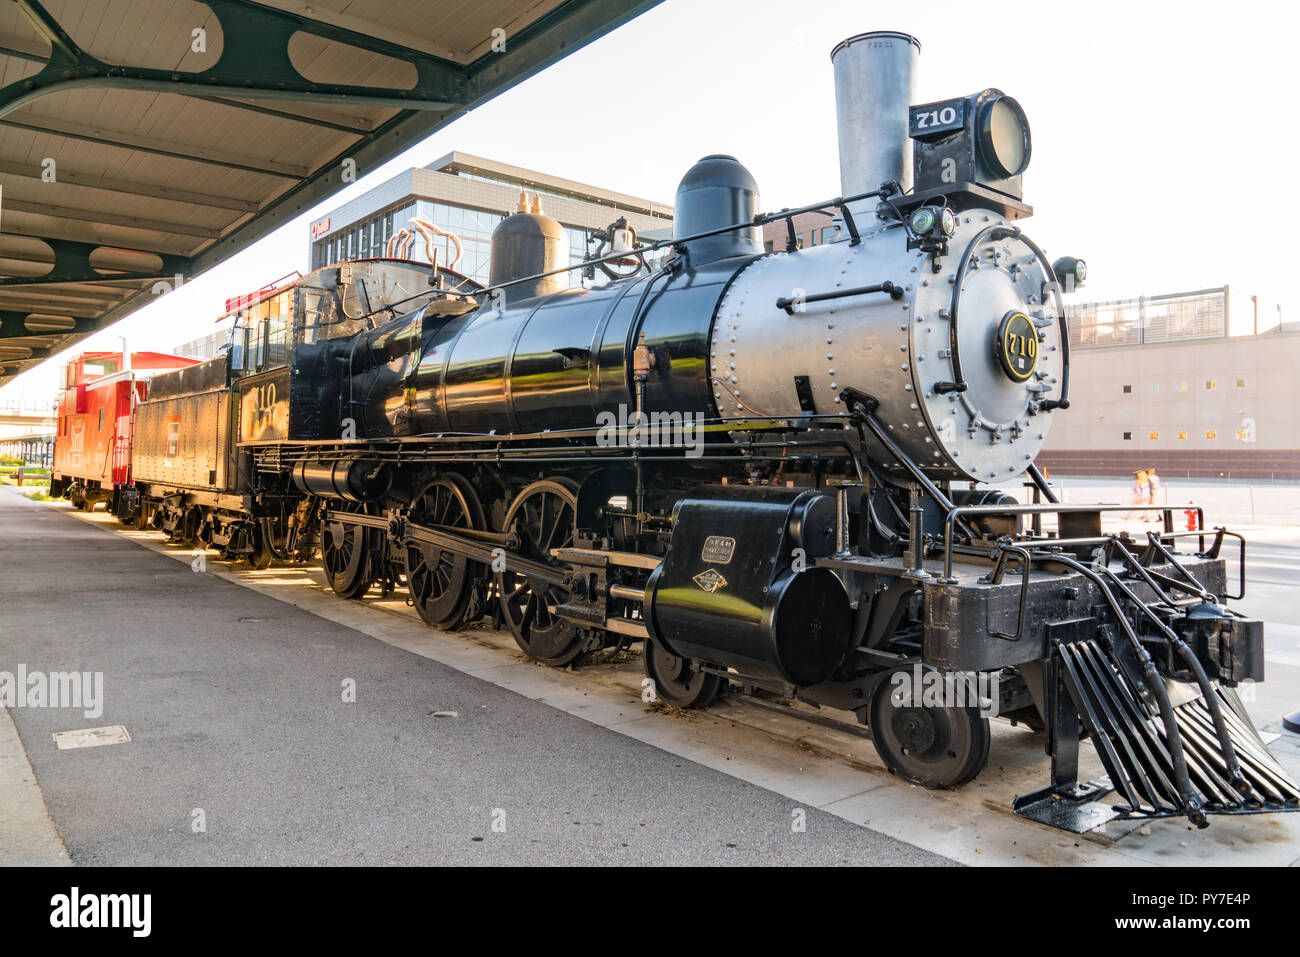 LINCOLN, Nebraska - Julio 10, 2018: en tren de vapor restaurado Bill Harris Iron Horse Park, en el distrito de Haymarket de Lincoln, Nebraska Foto de stock